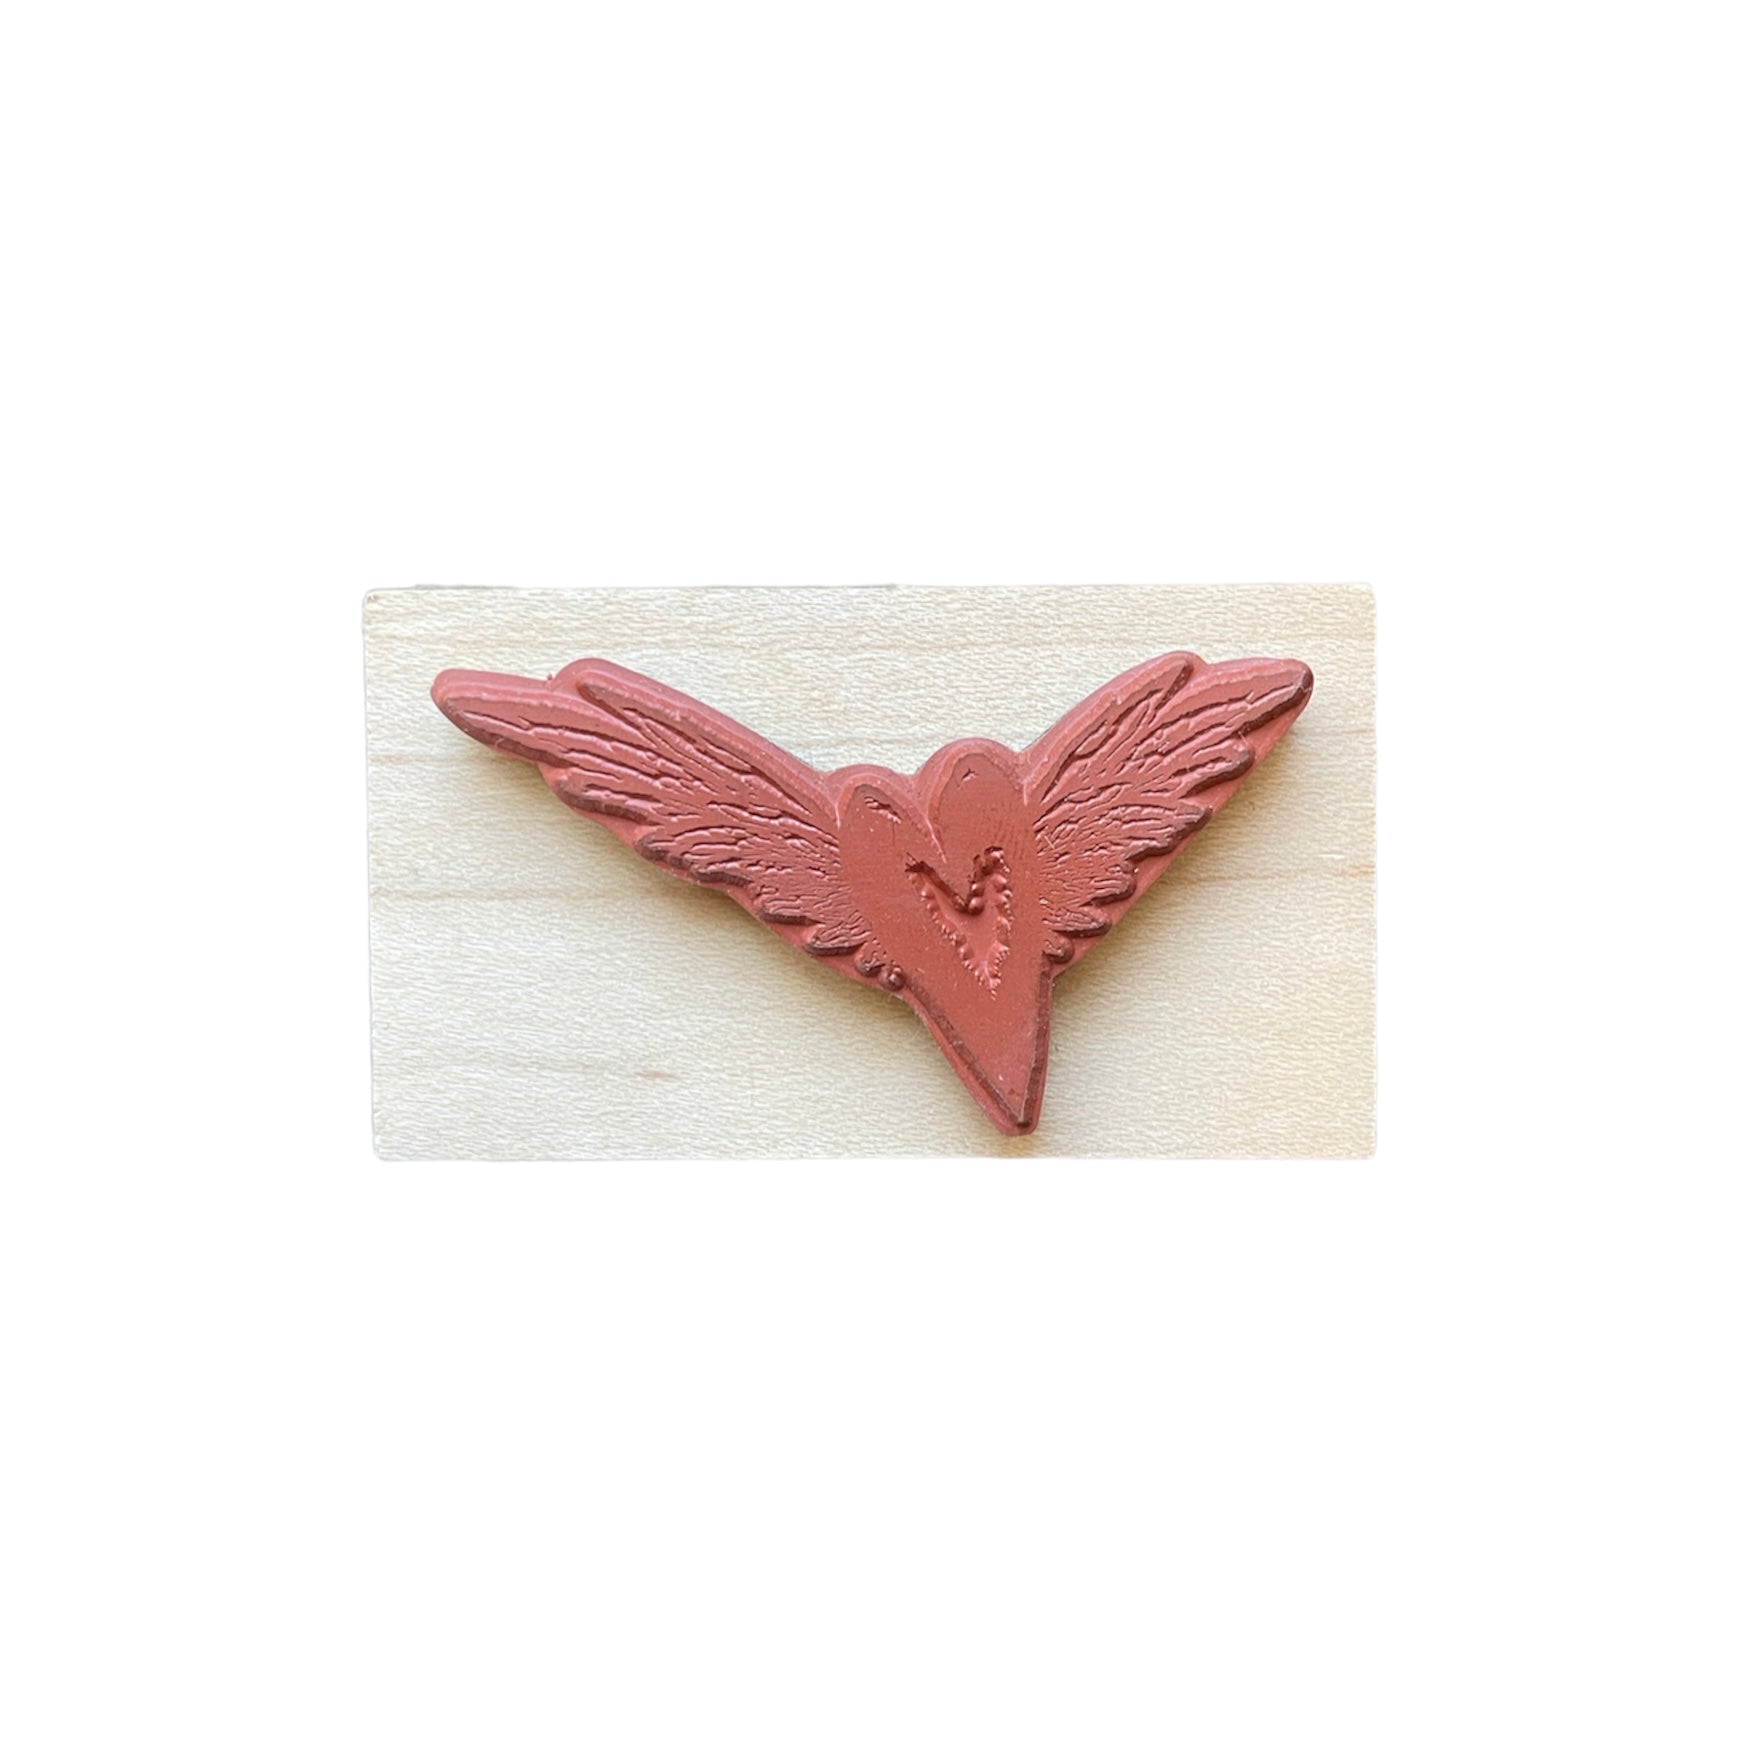 Inkadinkado - Dawn Houser - Heart with Wings